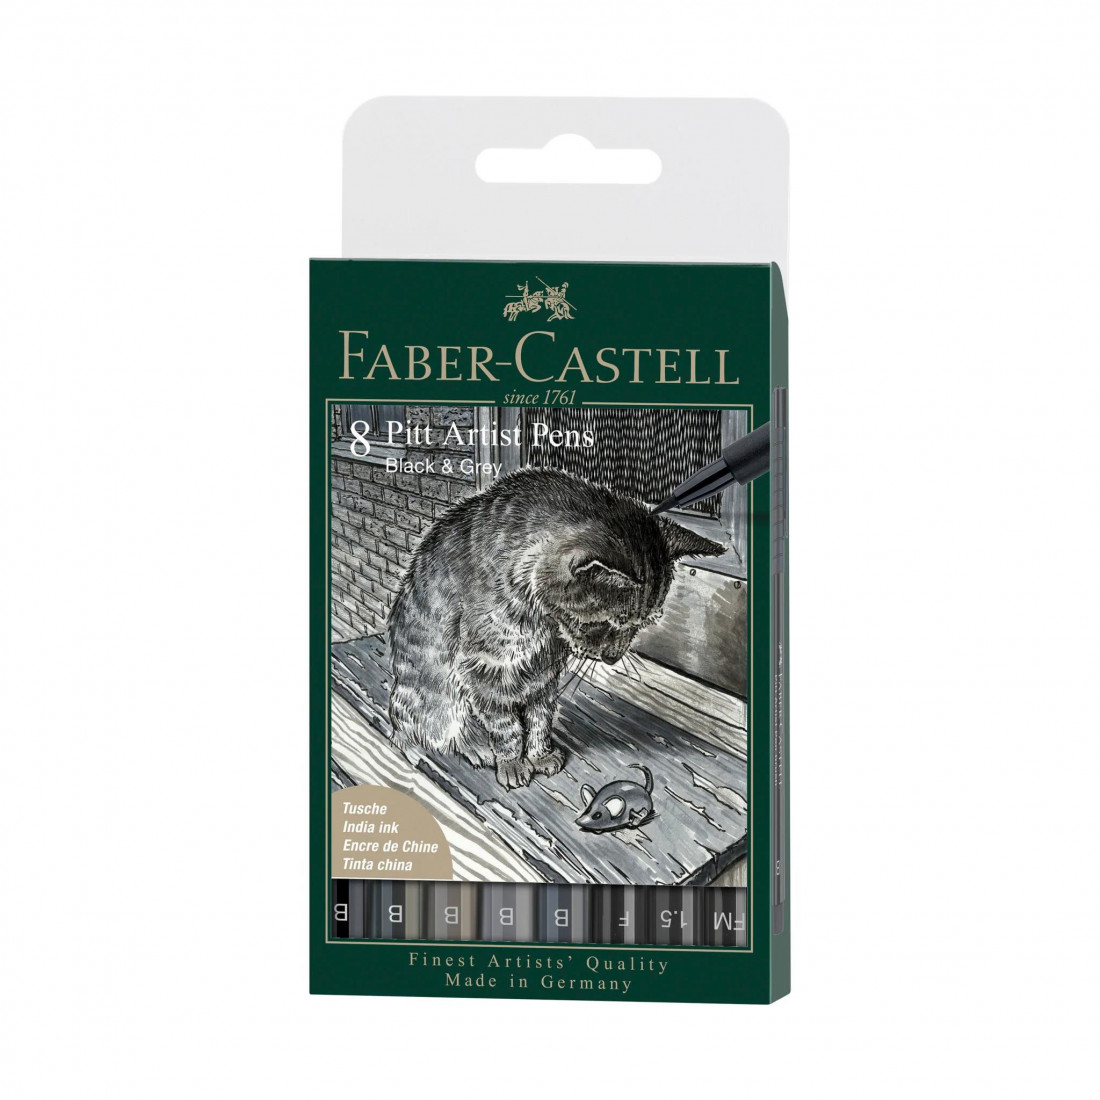 Faber-Castell 167171 Pitt Artist Pens Black & Grey tin of 8